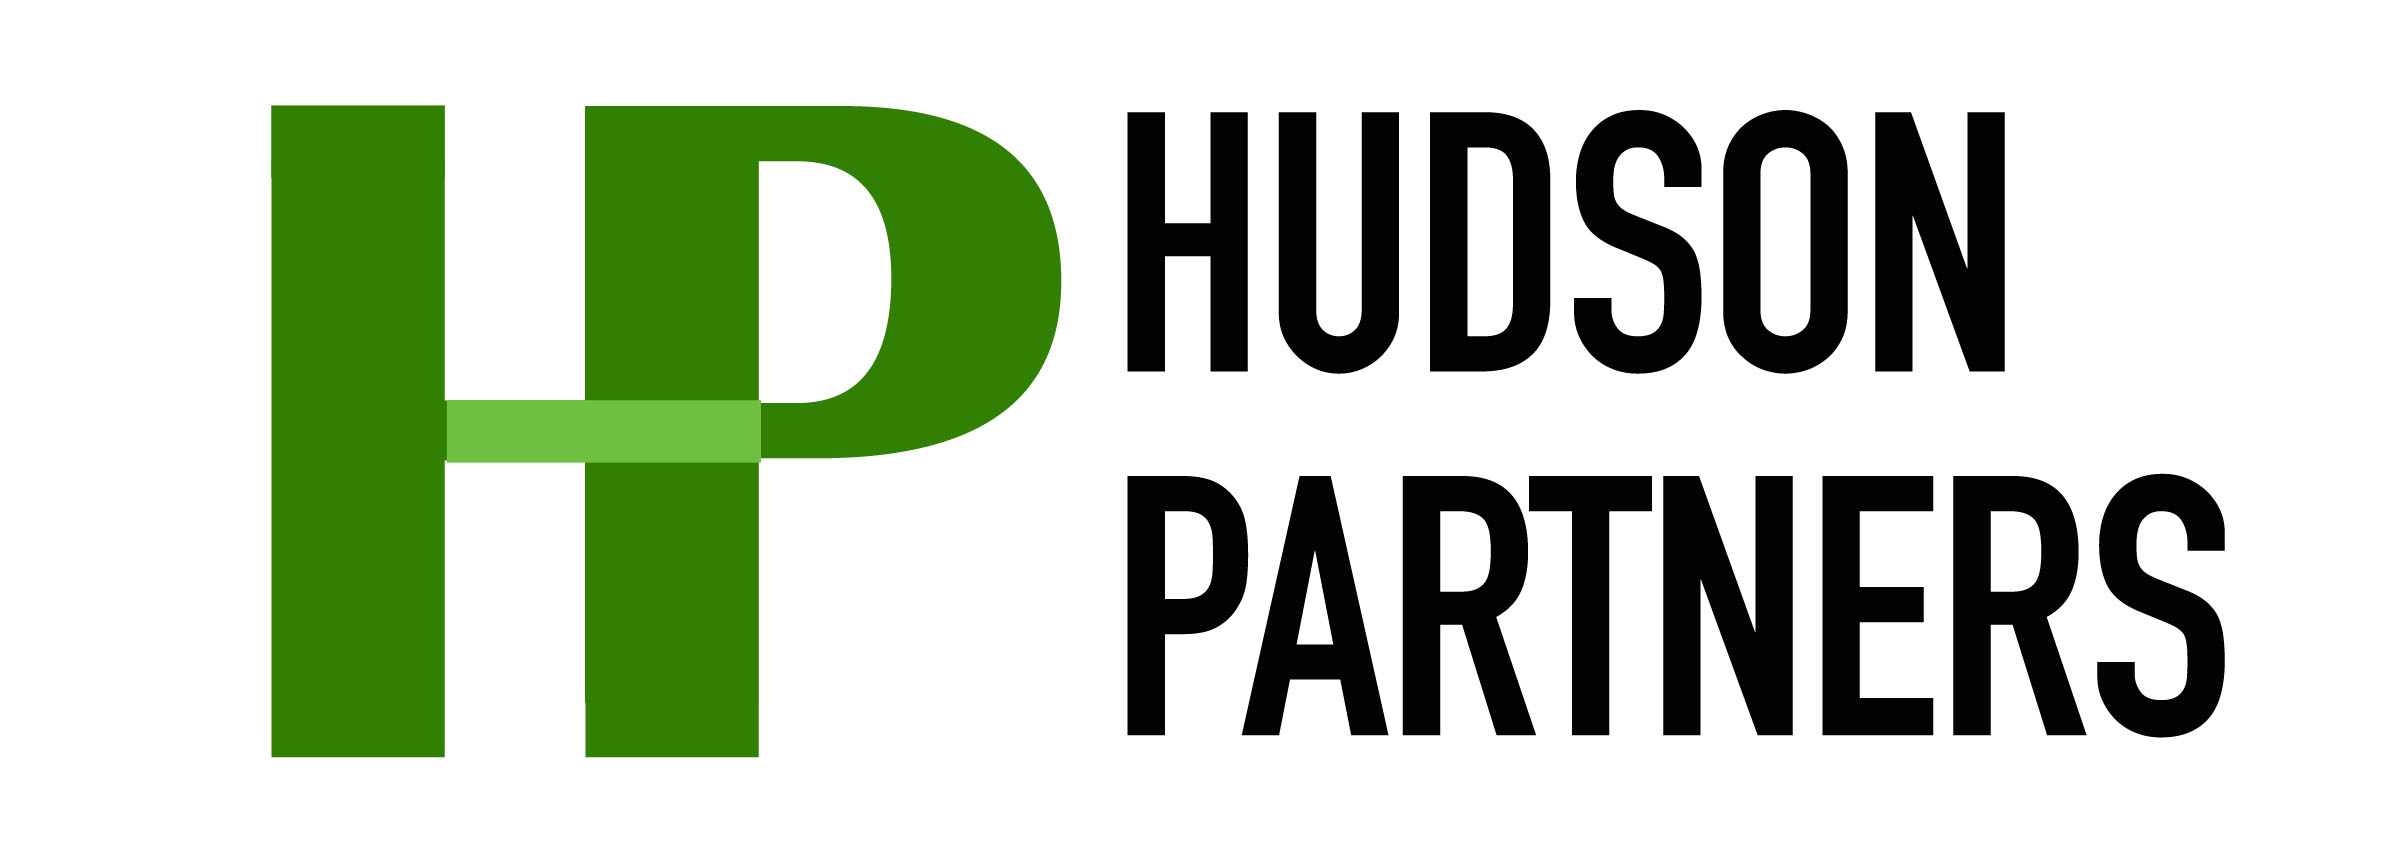 Hudson Partners final logo